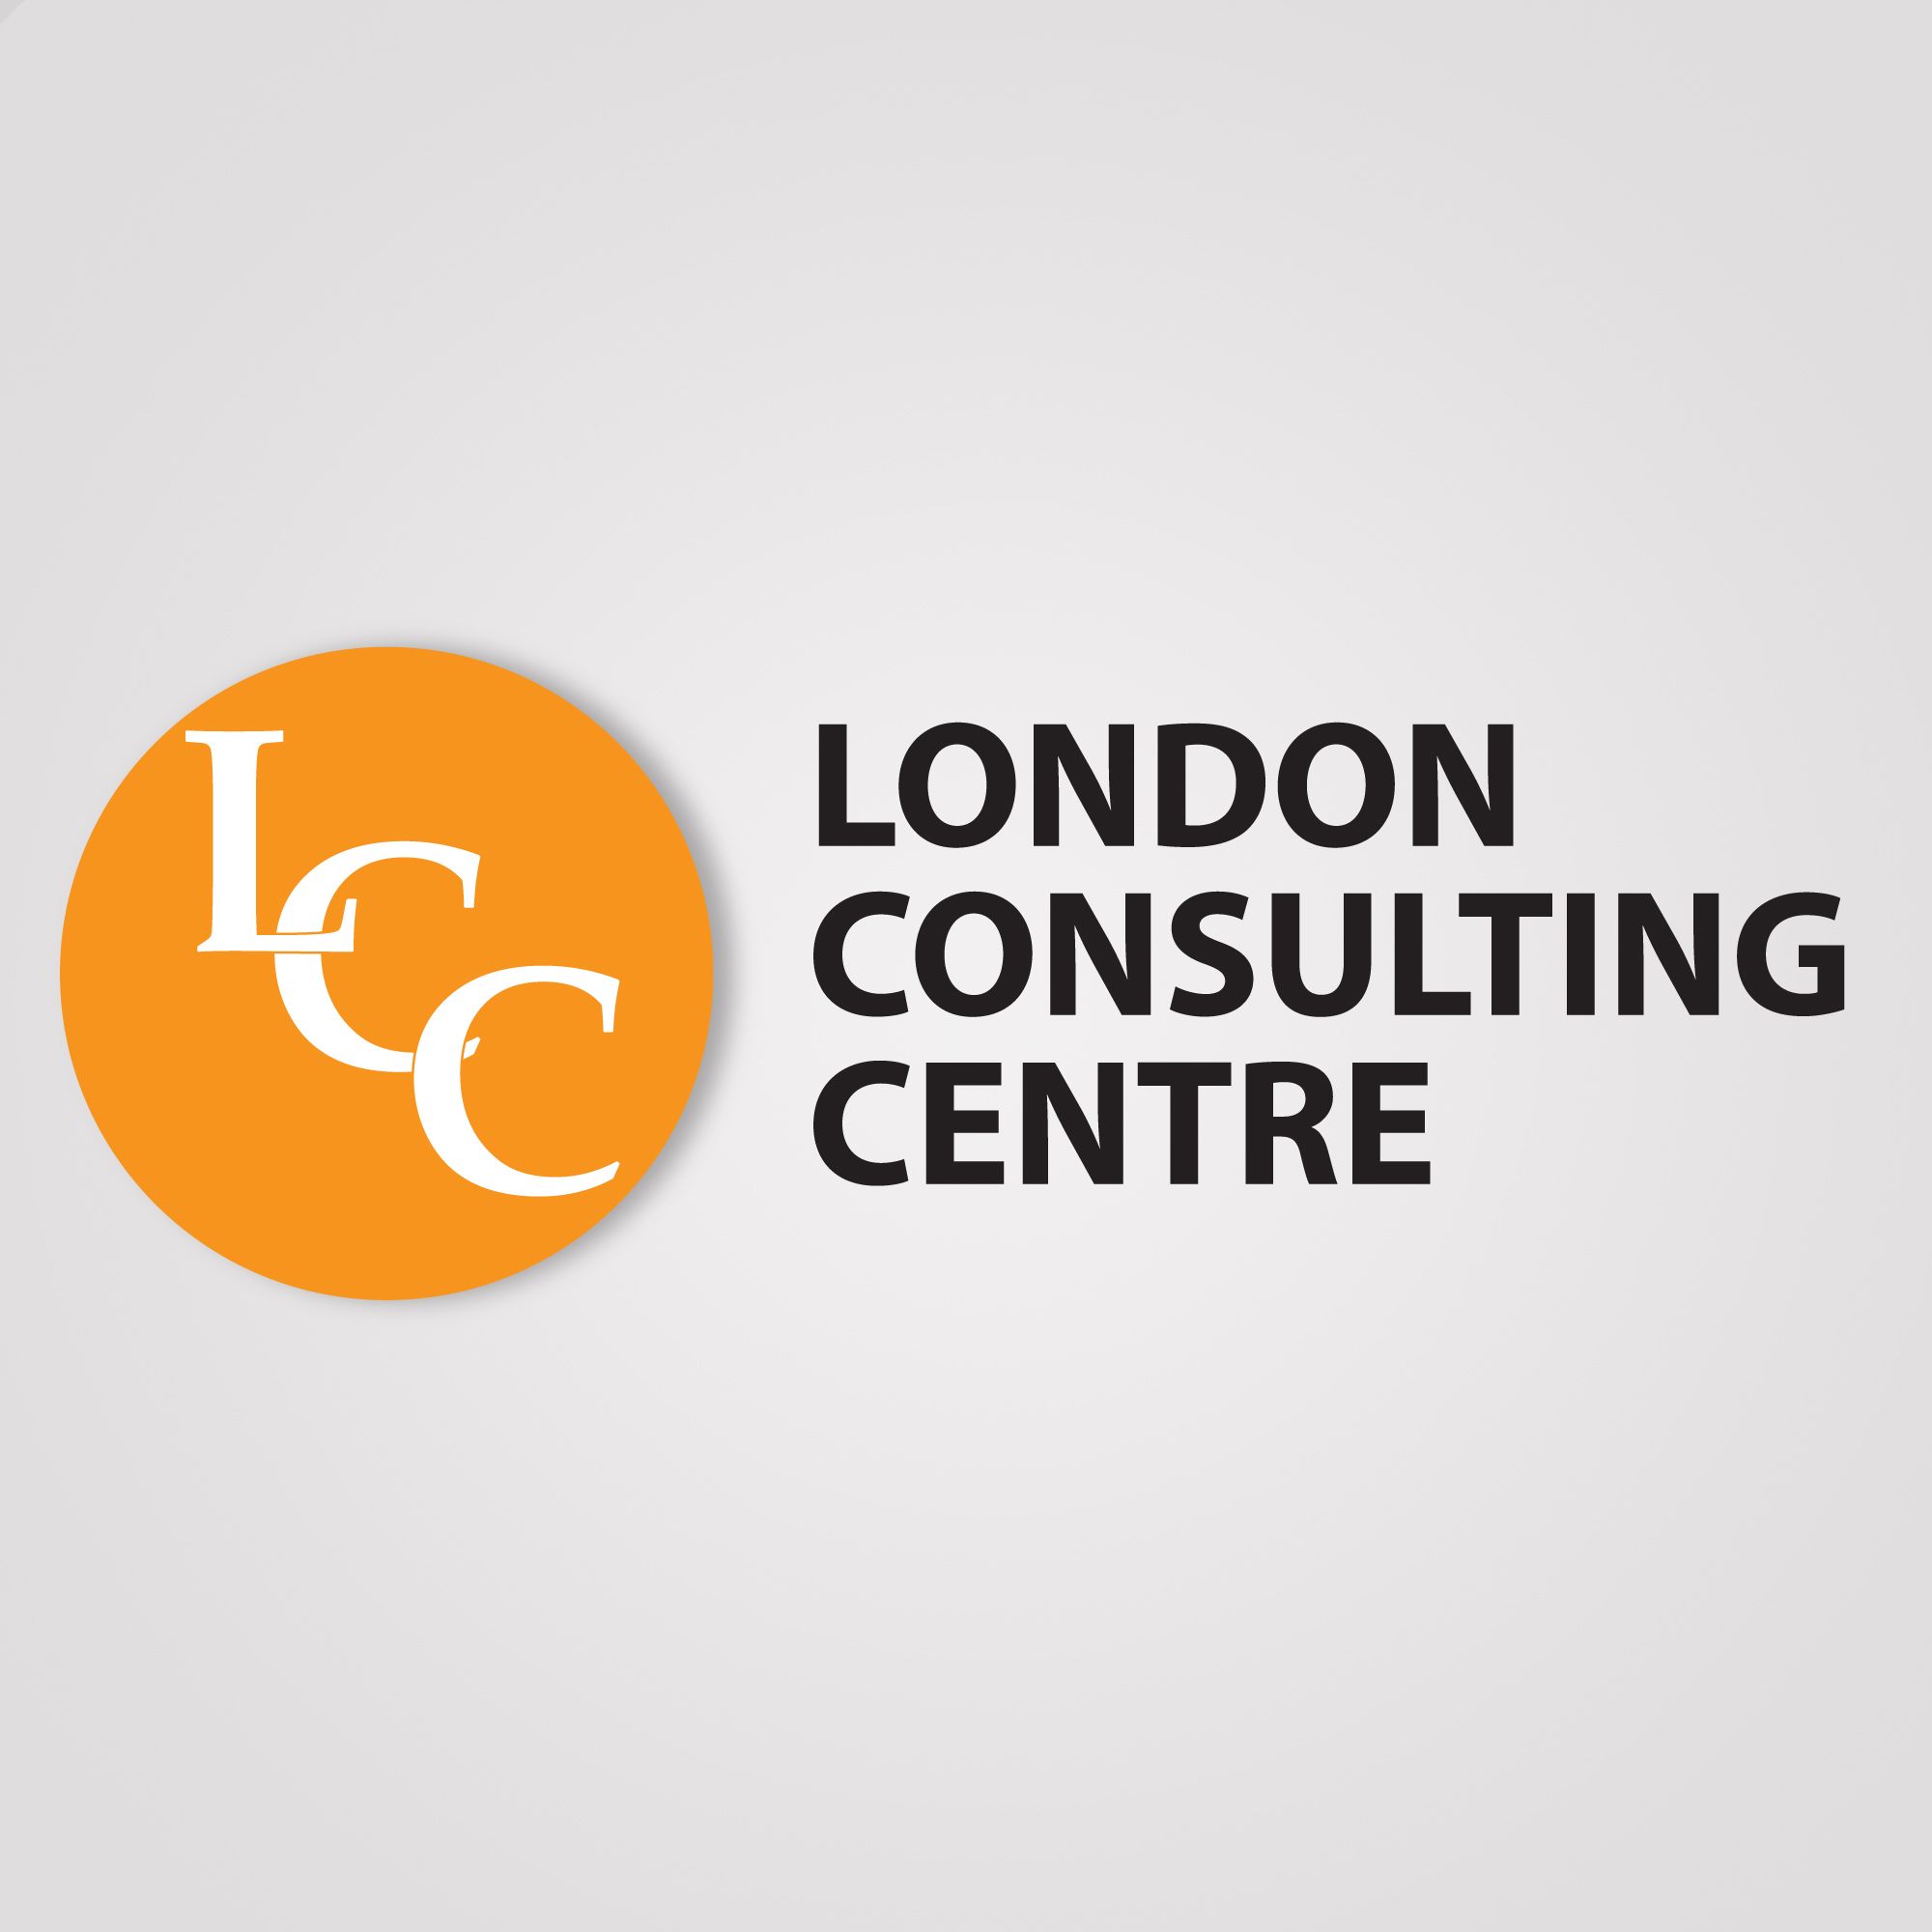 ФС для London Consulting Centre - дизайнер MEOW